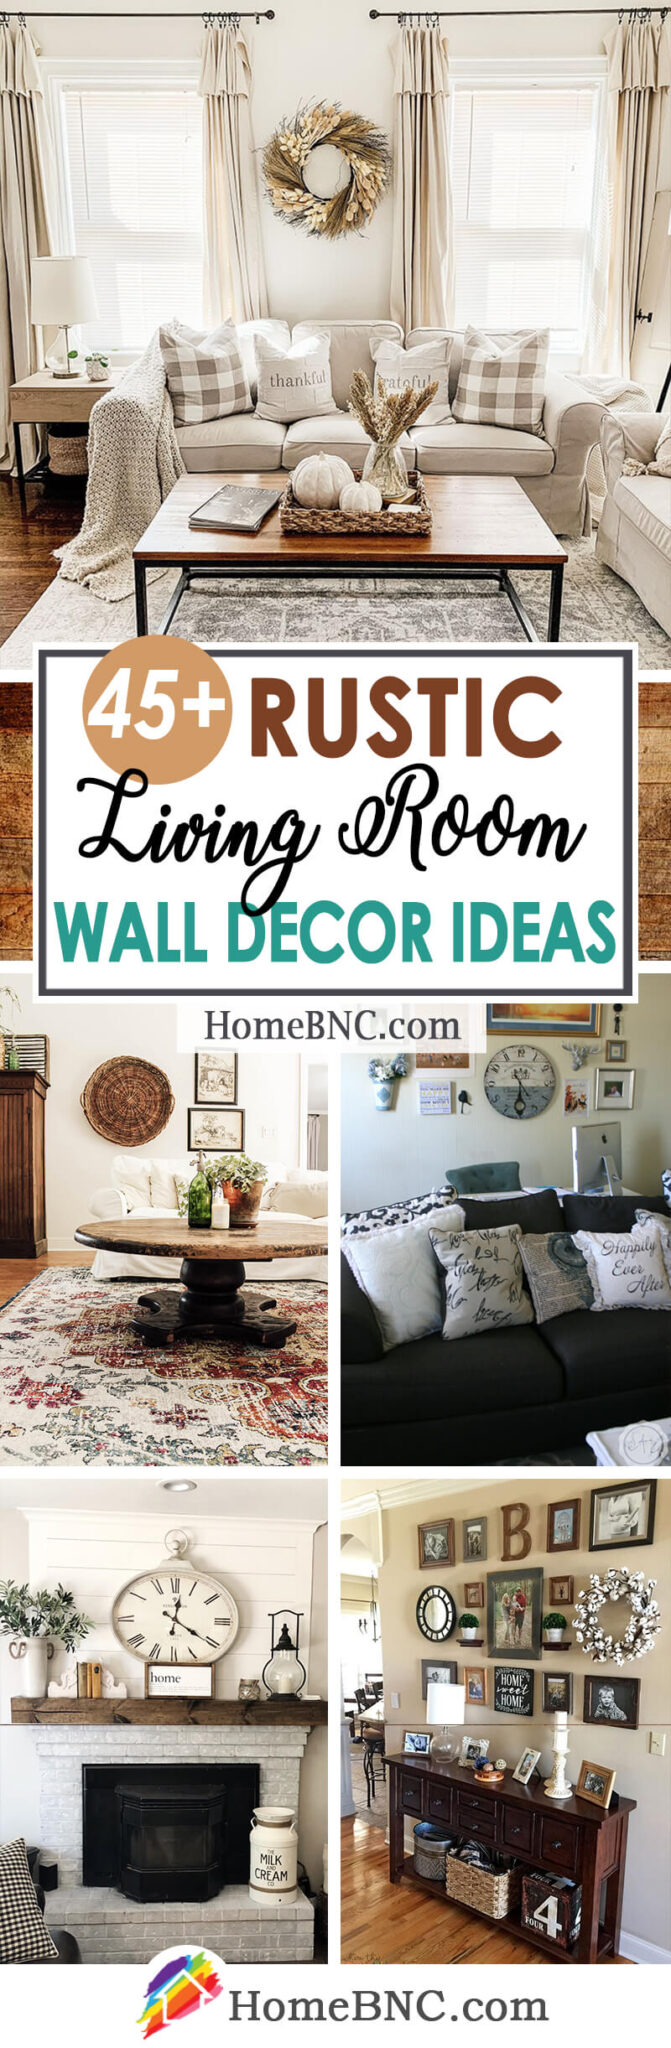 Rustic Living Room Wall Decor Ideas Pinterest Share Homebnc V5 671x2048 